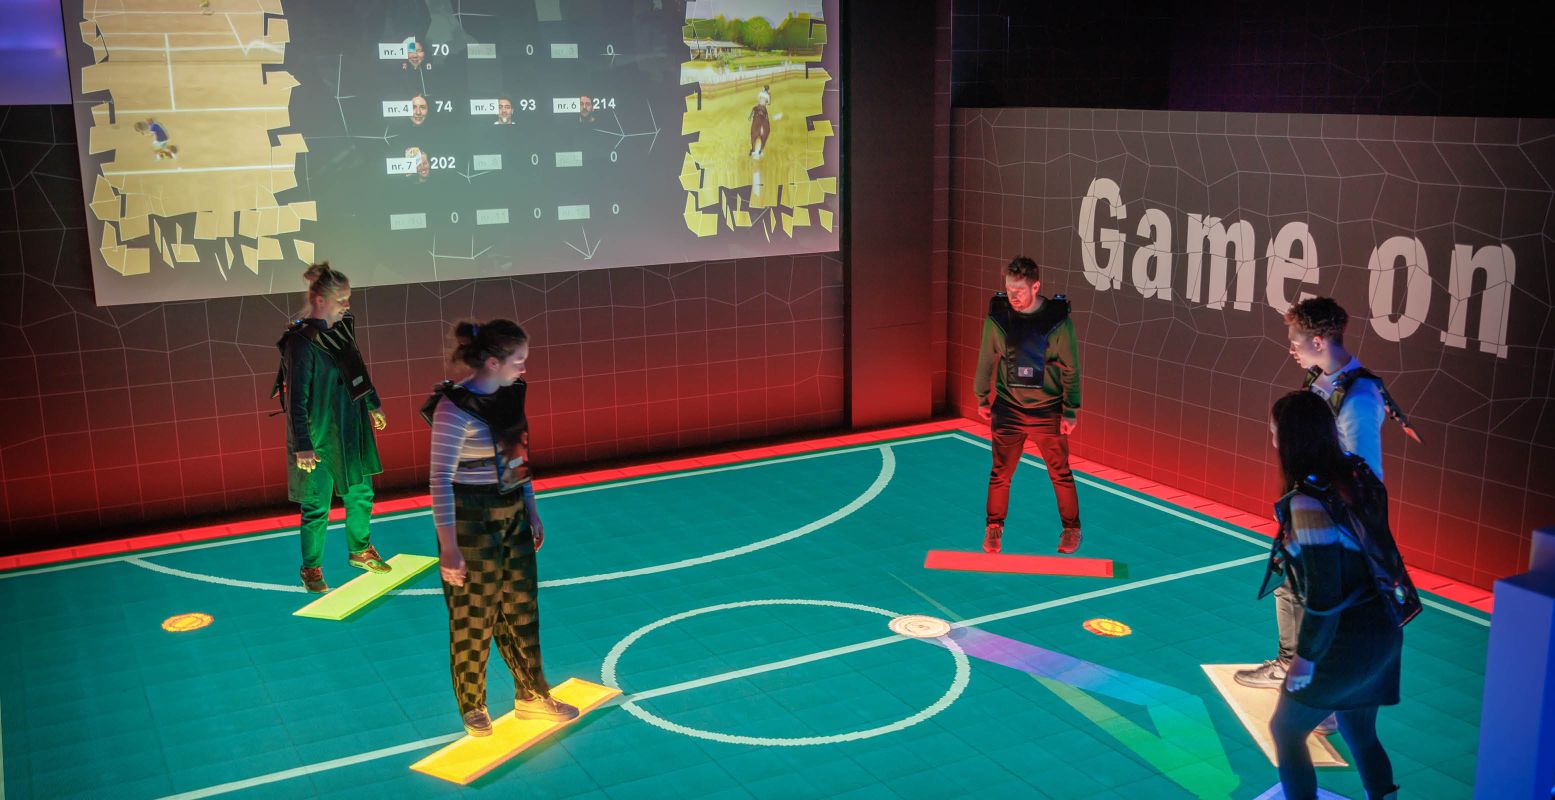 The game is on! Speel toffe games in het interactieve Mediamuseum in Hilversum. Foto: Mediamuseum © Jorrit Lousberg